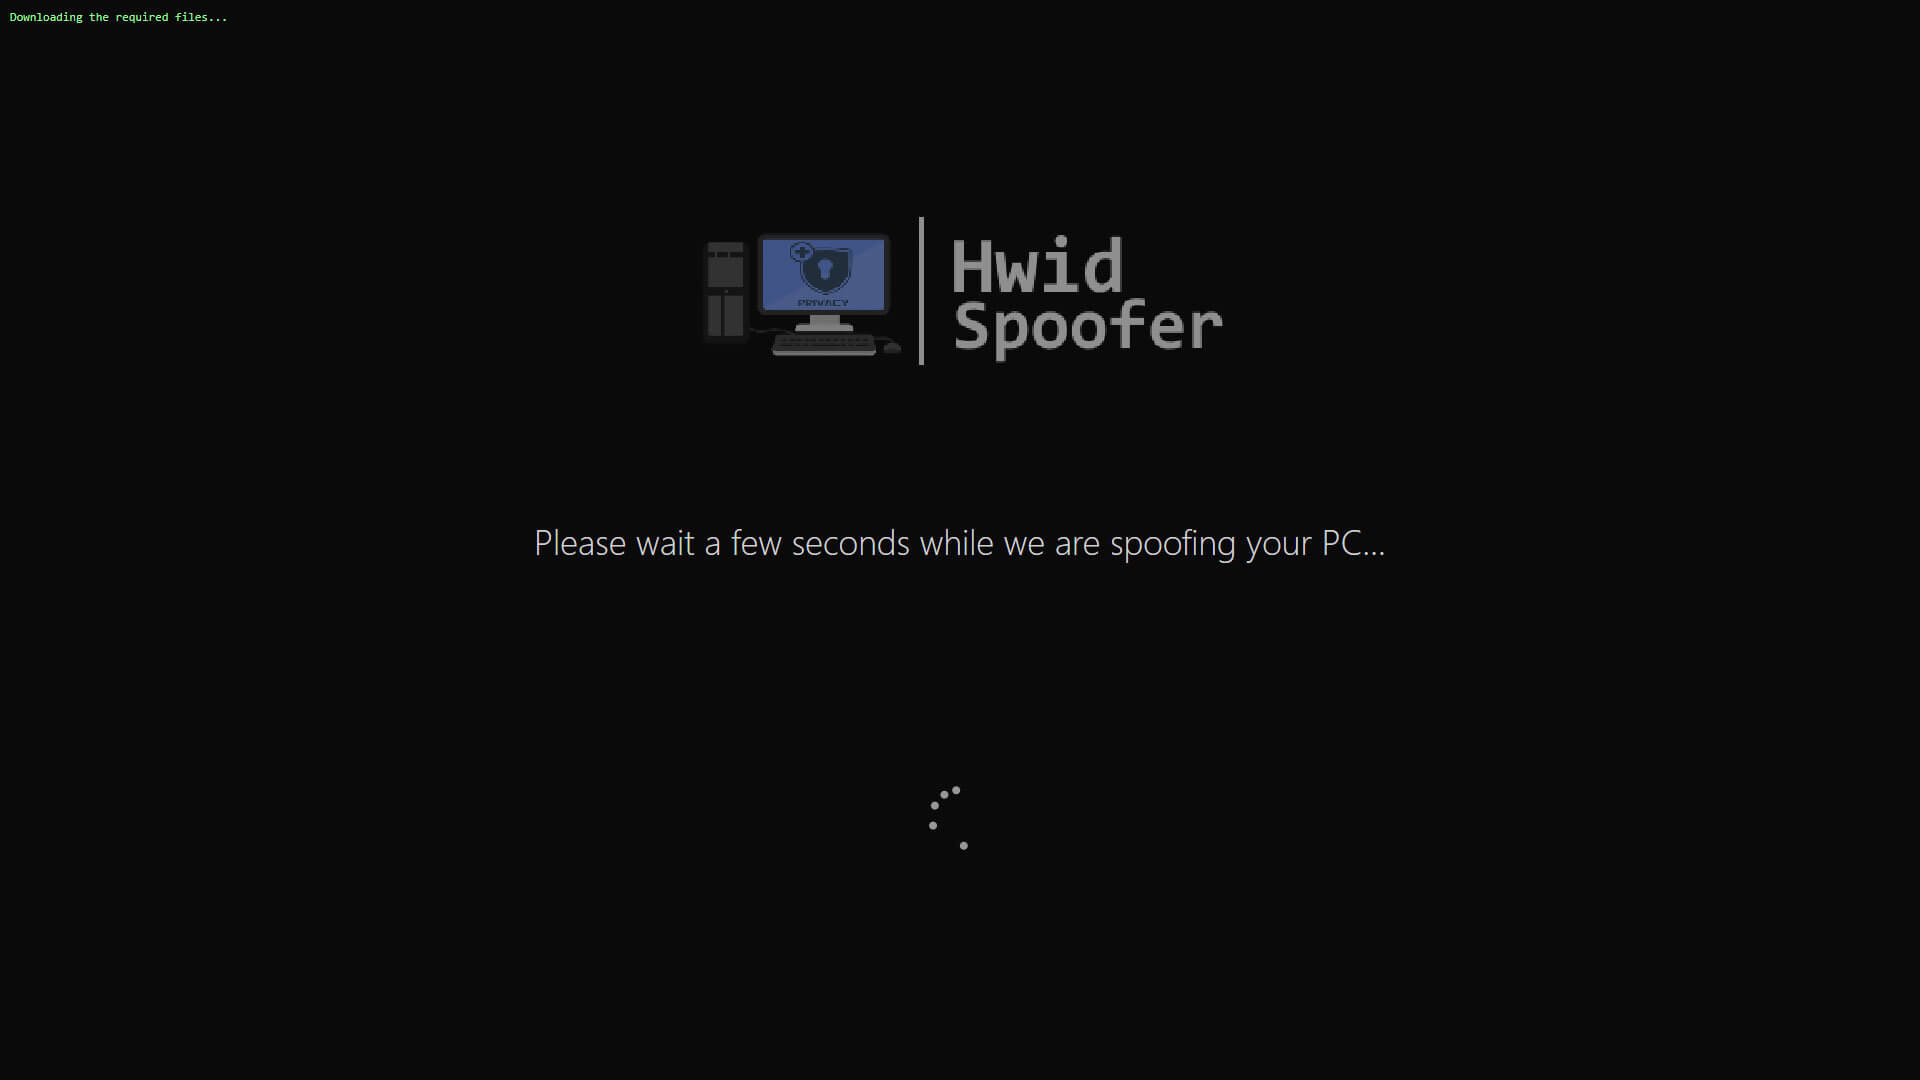 HWID Spoofers